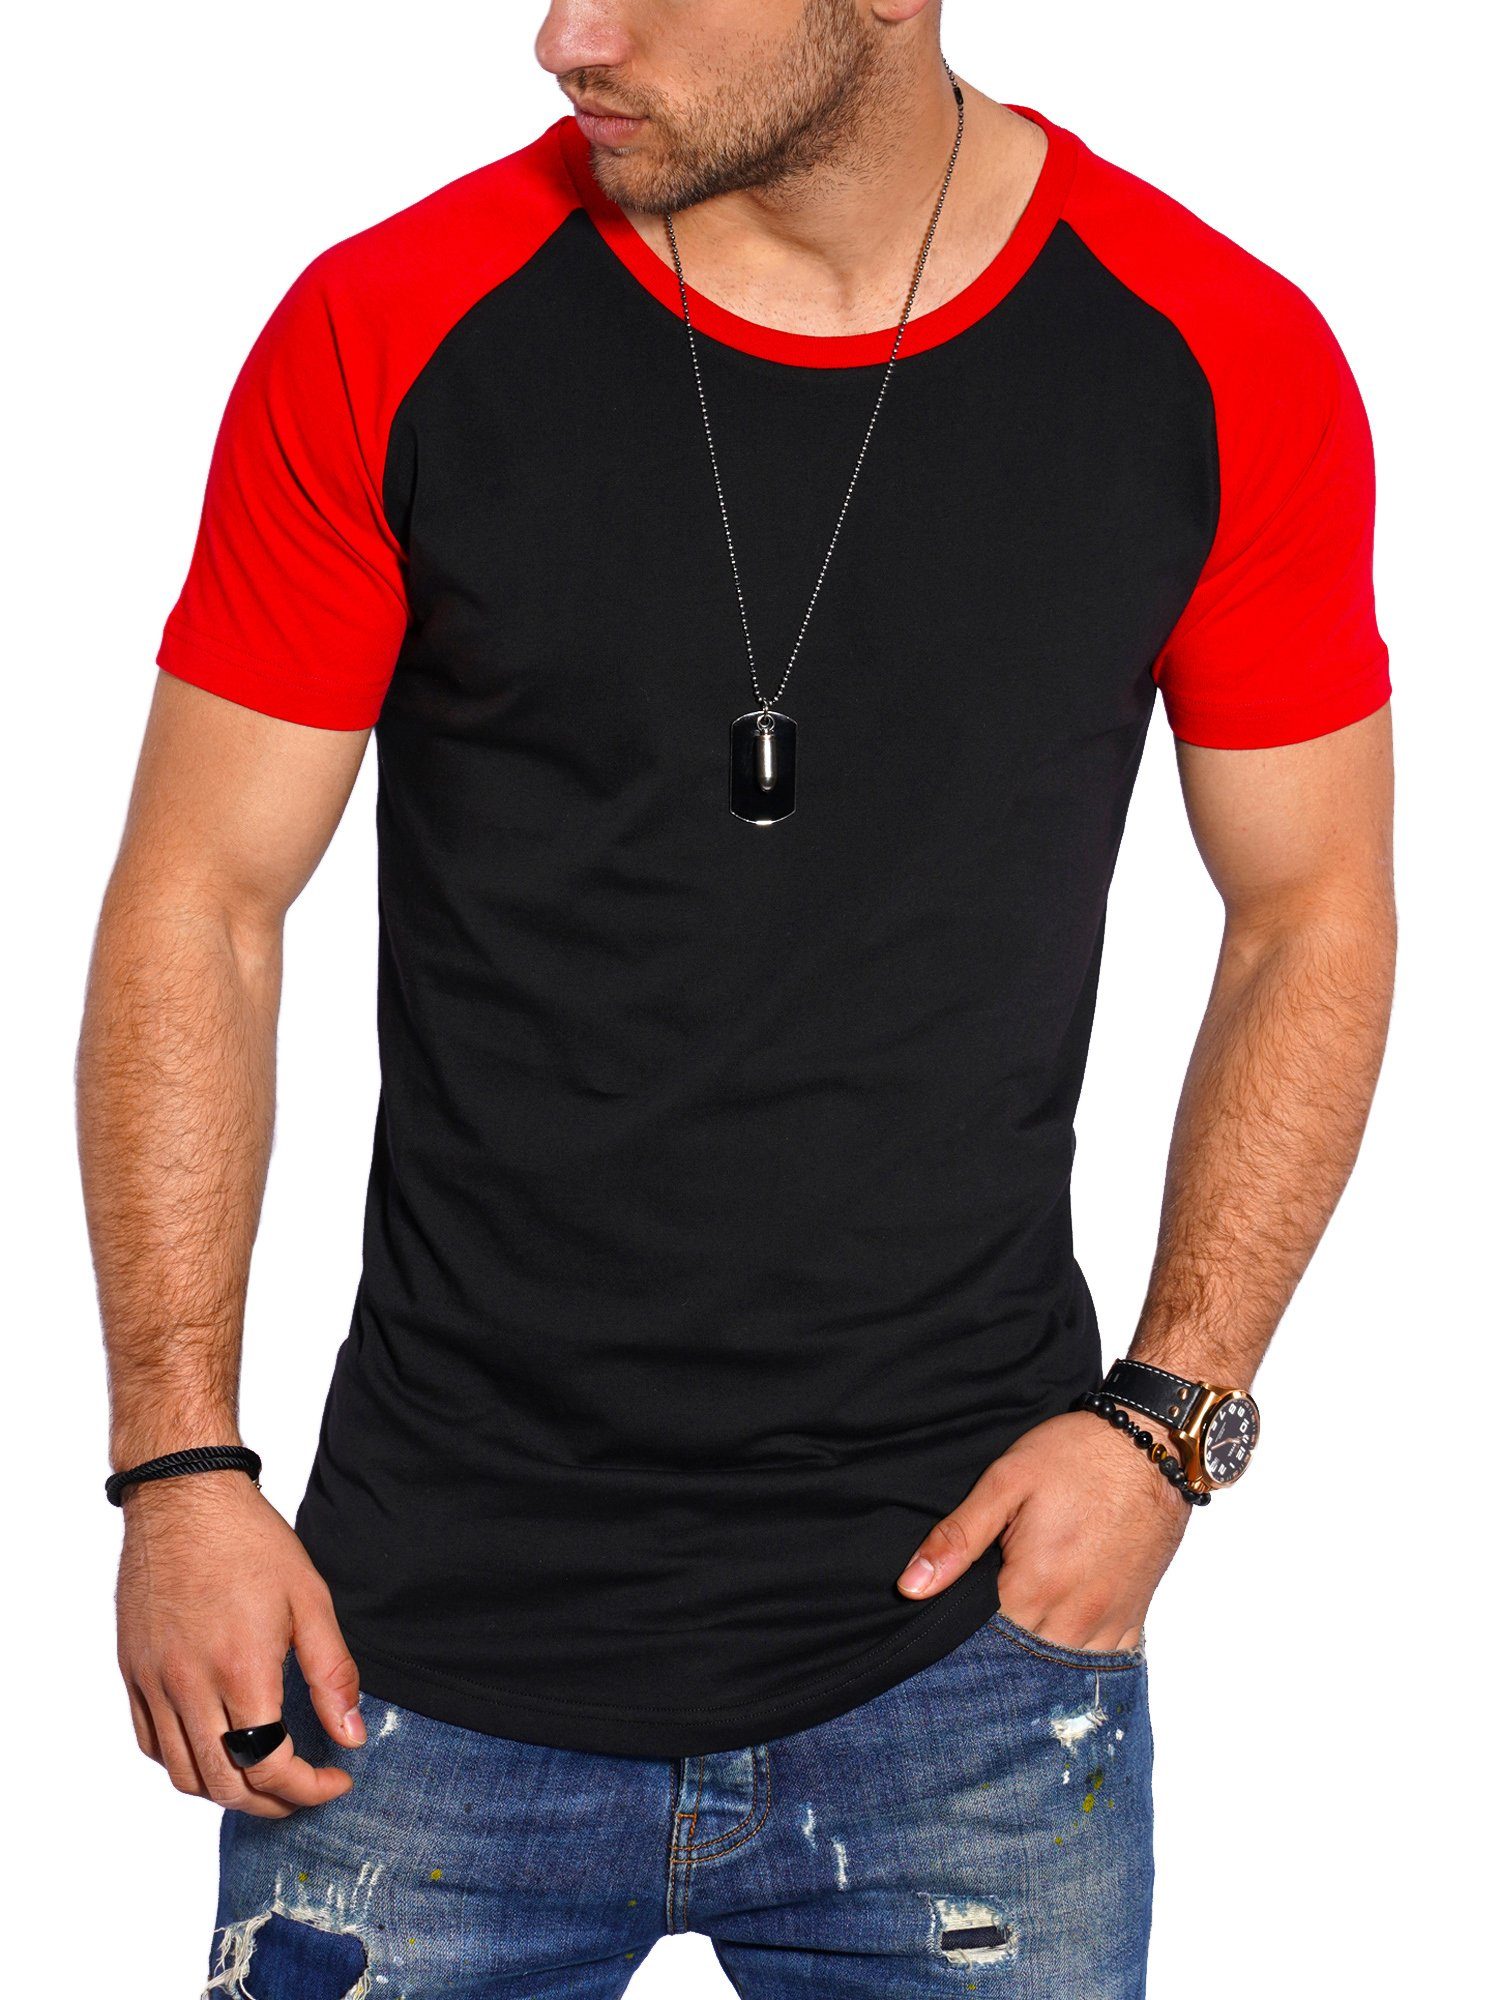 SDBOISE Raglan-Stil T-Shirt Basic Schwarz-Rot im Style-Division